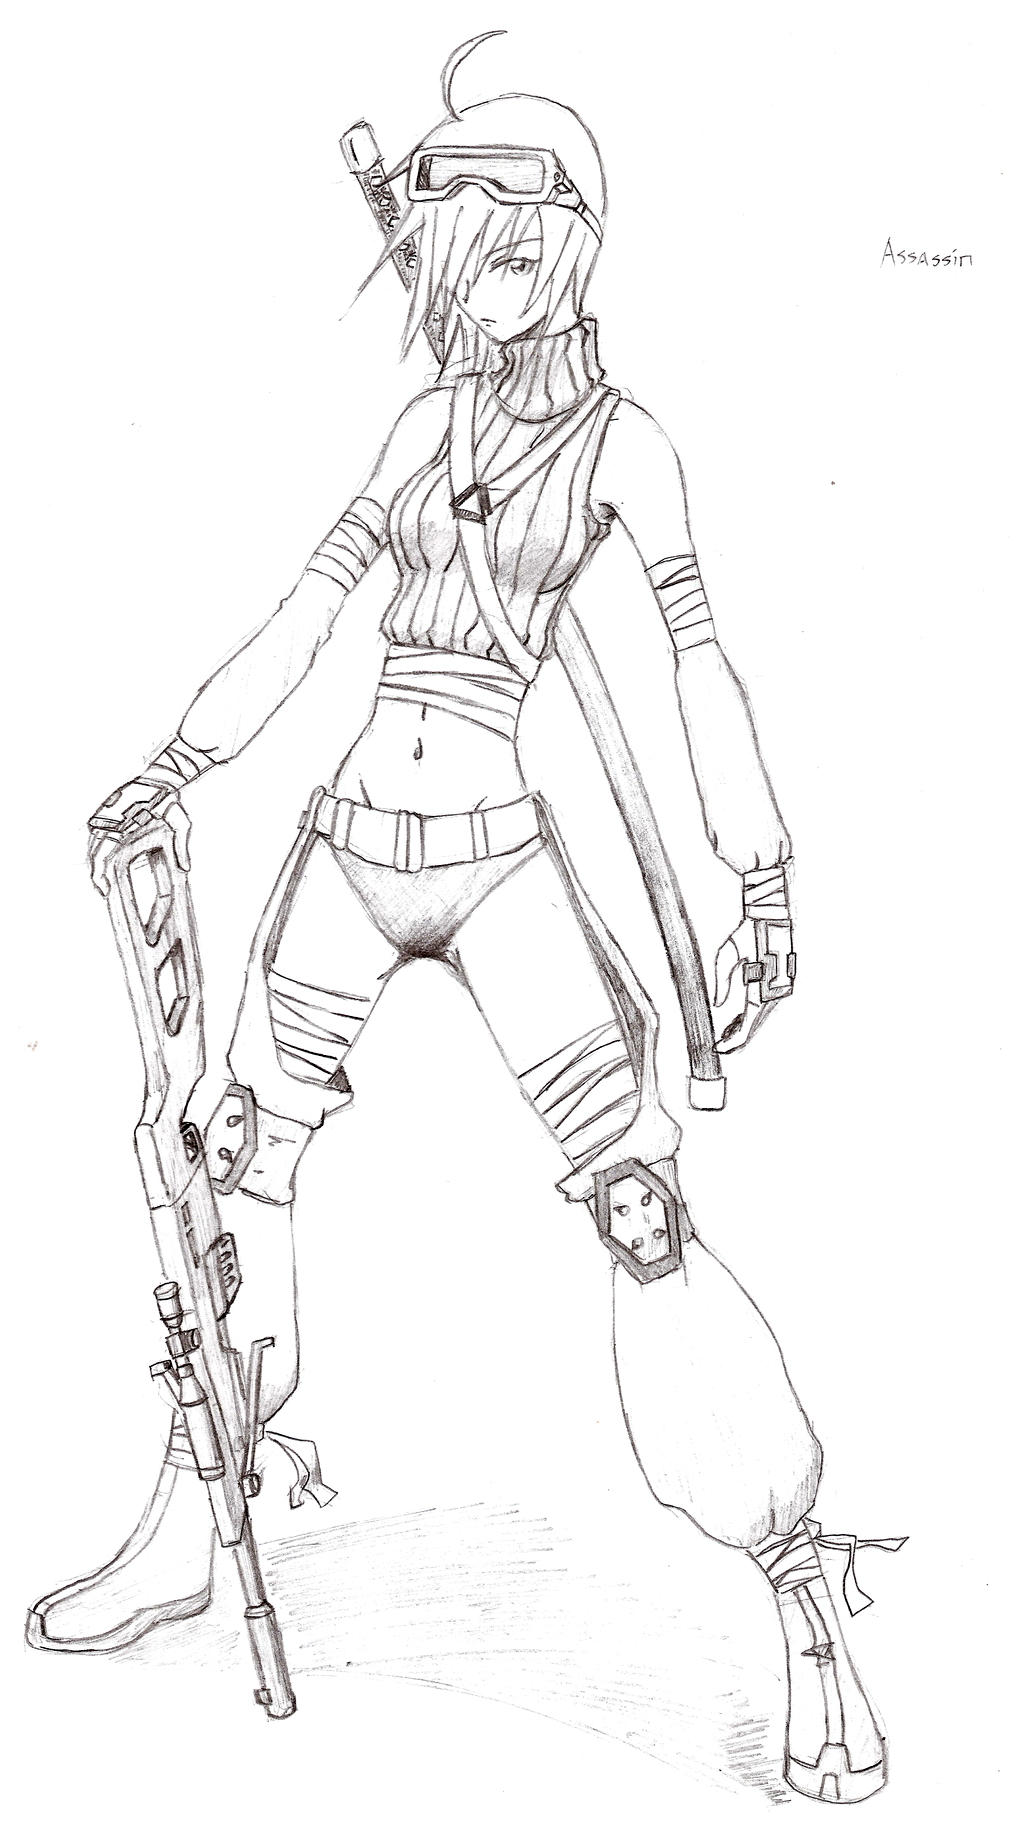 Female Assassin by Agito666 on DeviantArt